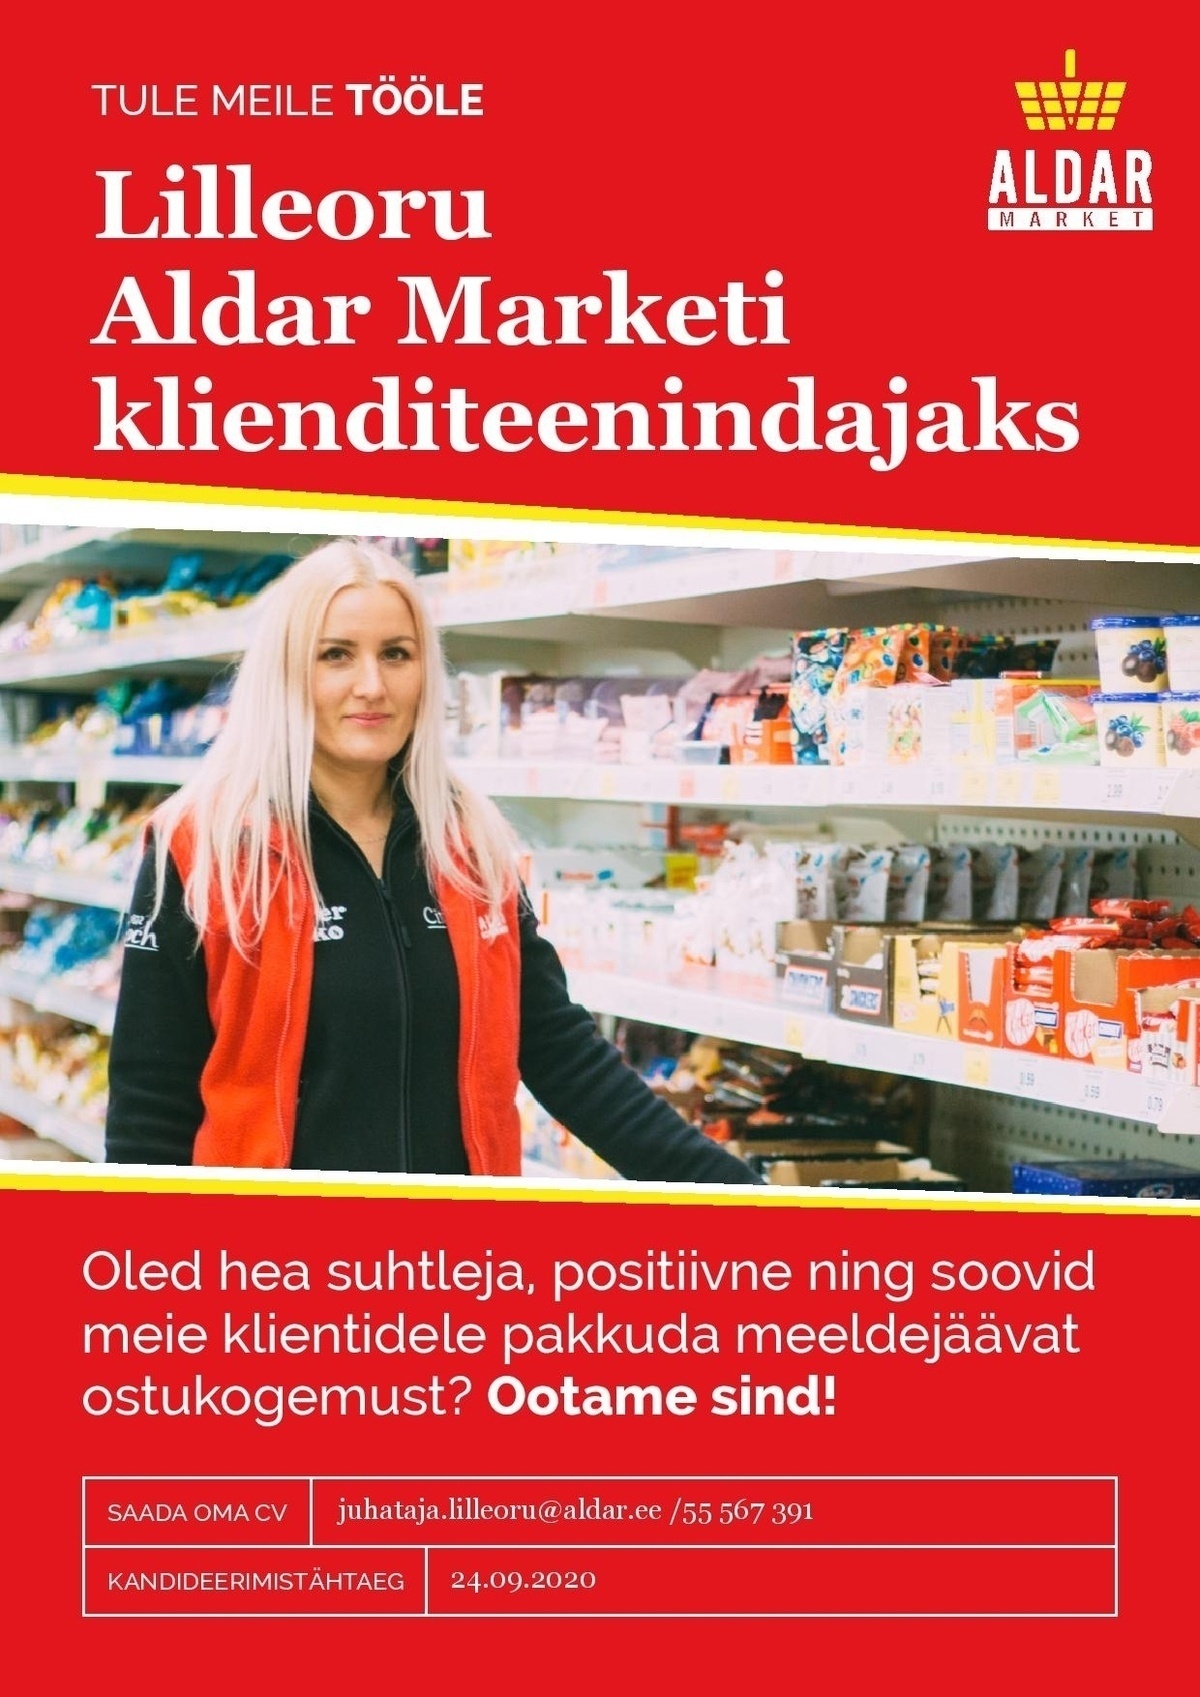 Aldar Eesti OÜ Klienditeenindaja Lilleoru Aldar Marketisse